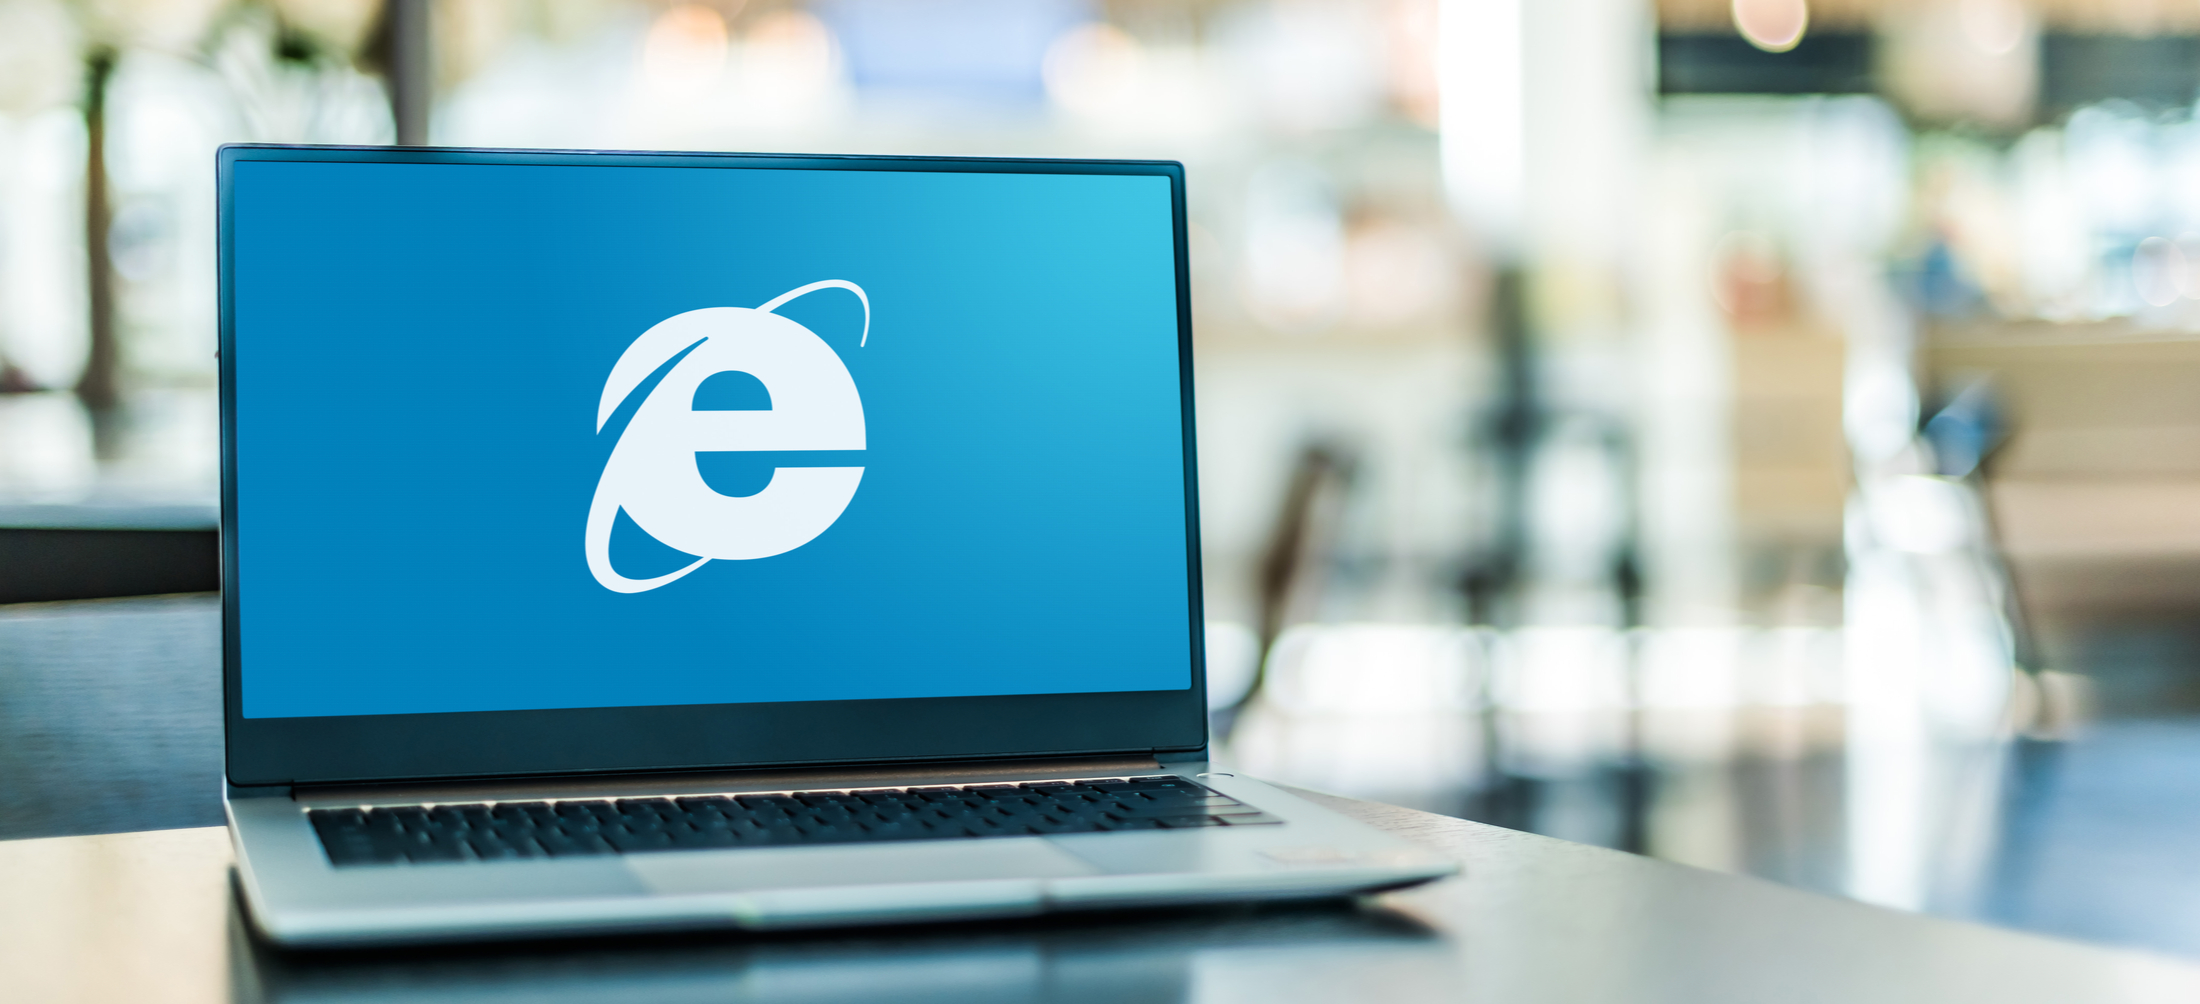 Internet Explorer 11 tirera sa révérence en 2023 sur Windows 10